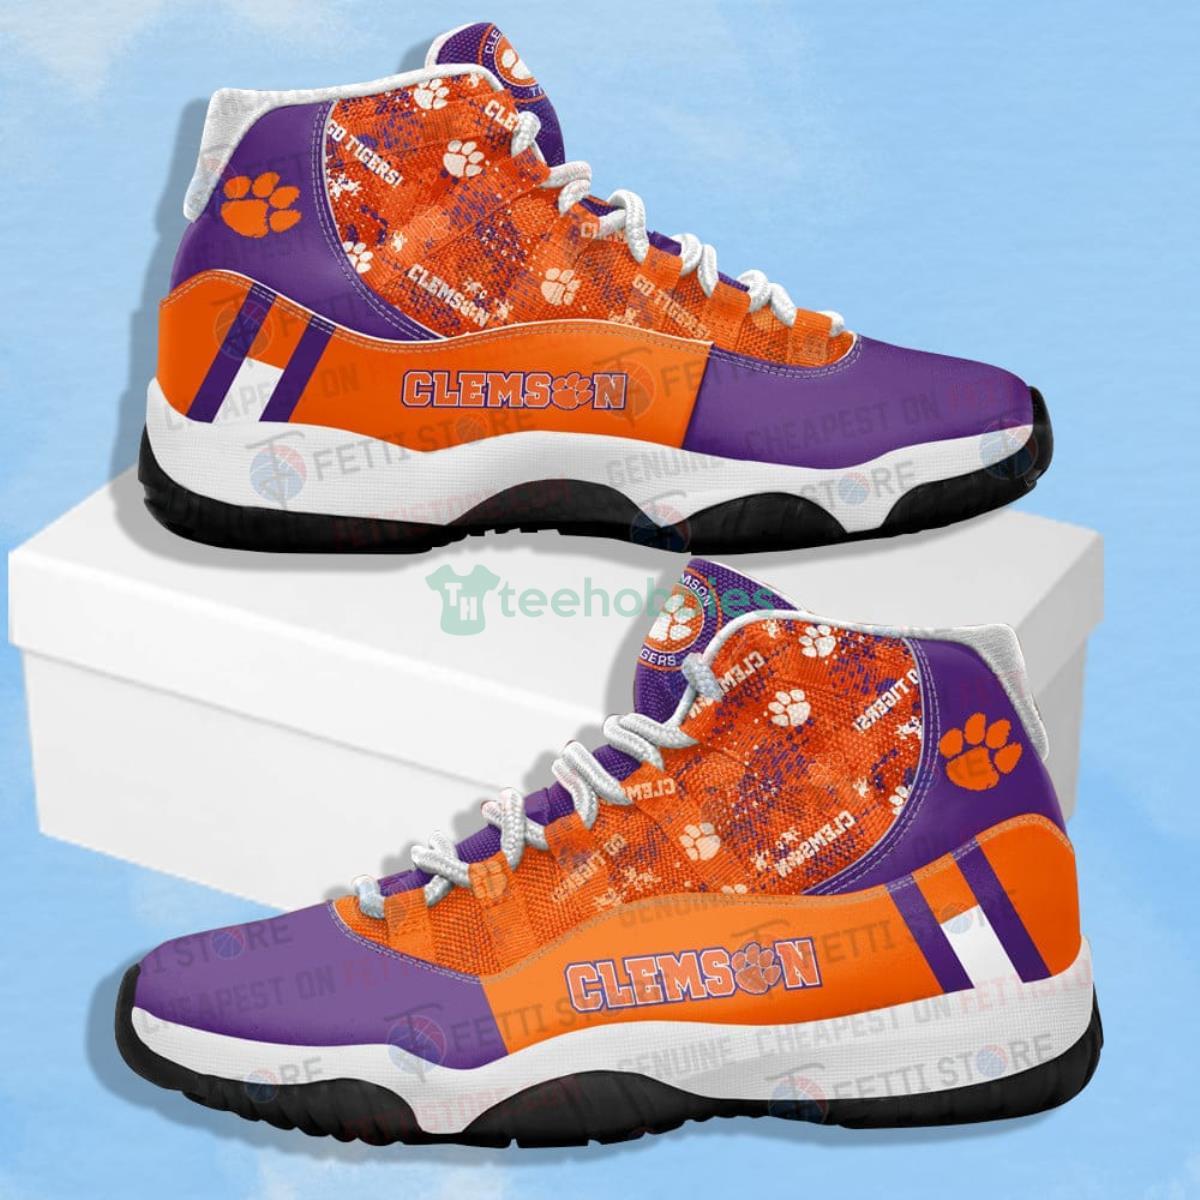 Clemson Tigers - NCAA Impressive Design Air Jordan 11 Shoes Product Photo 1